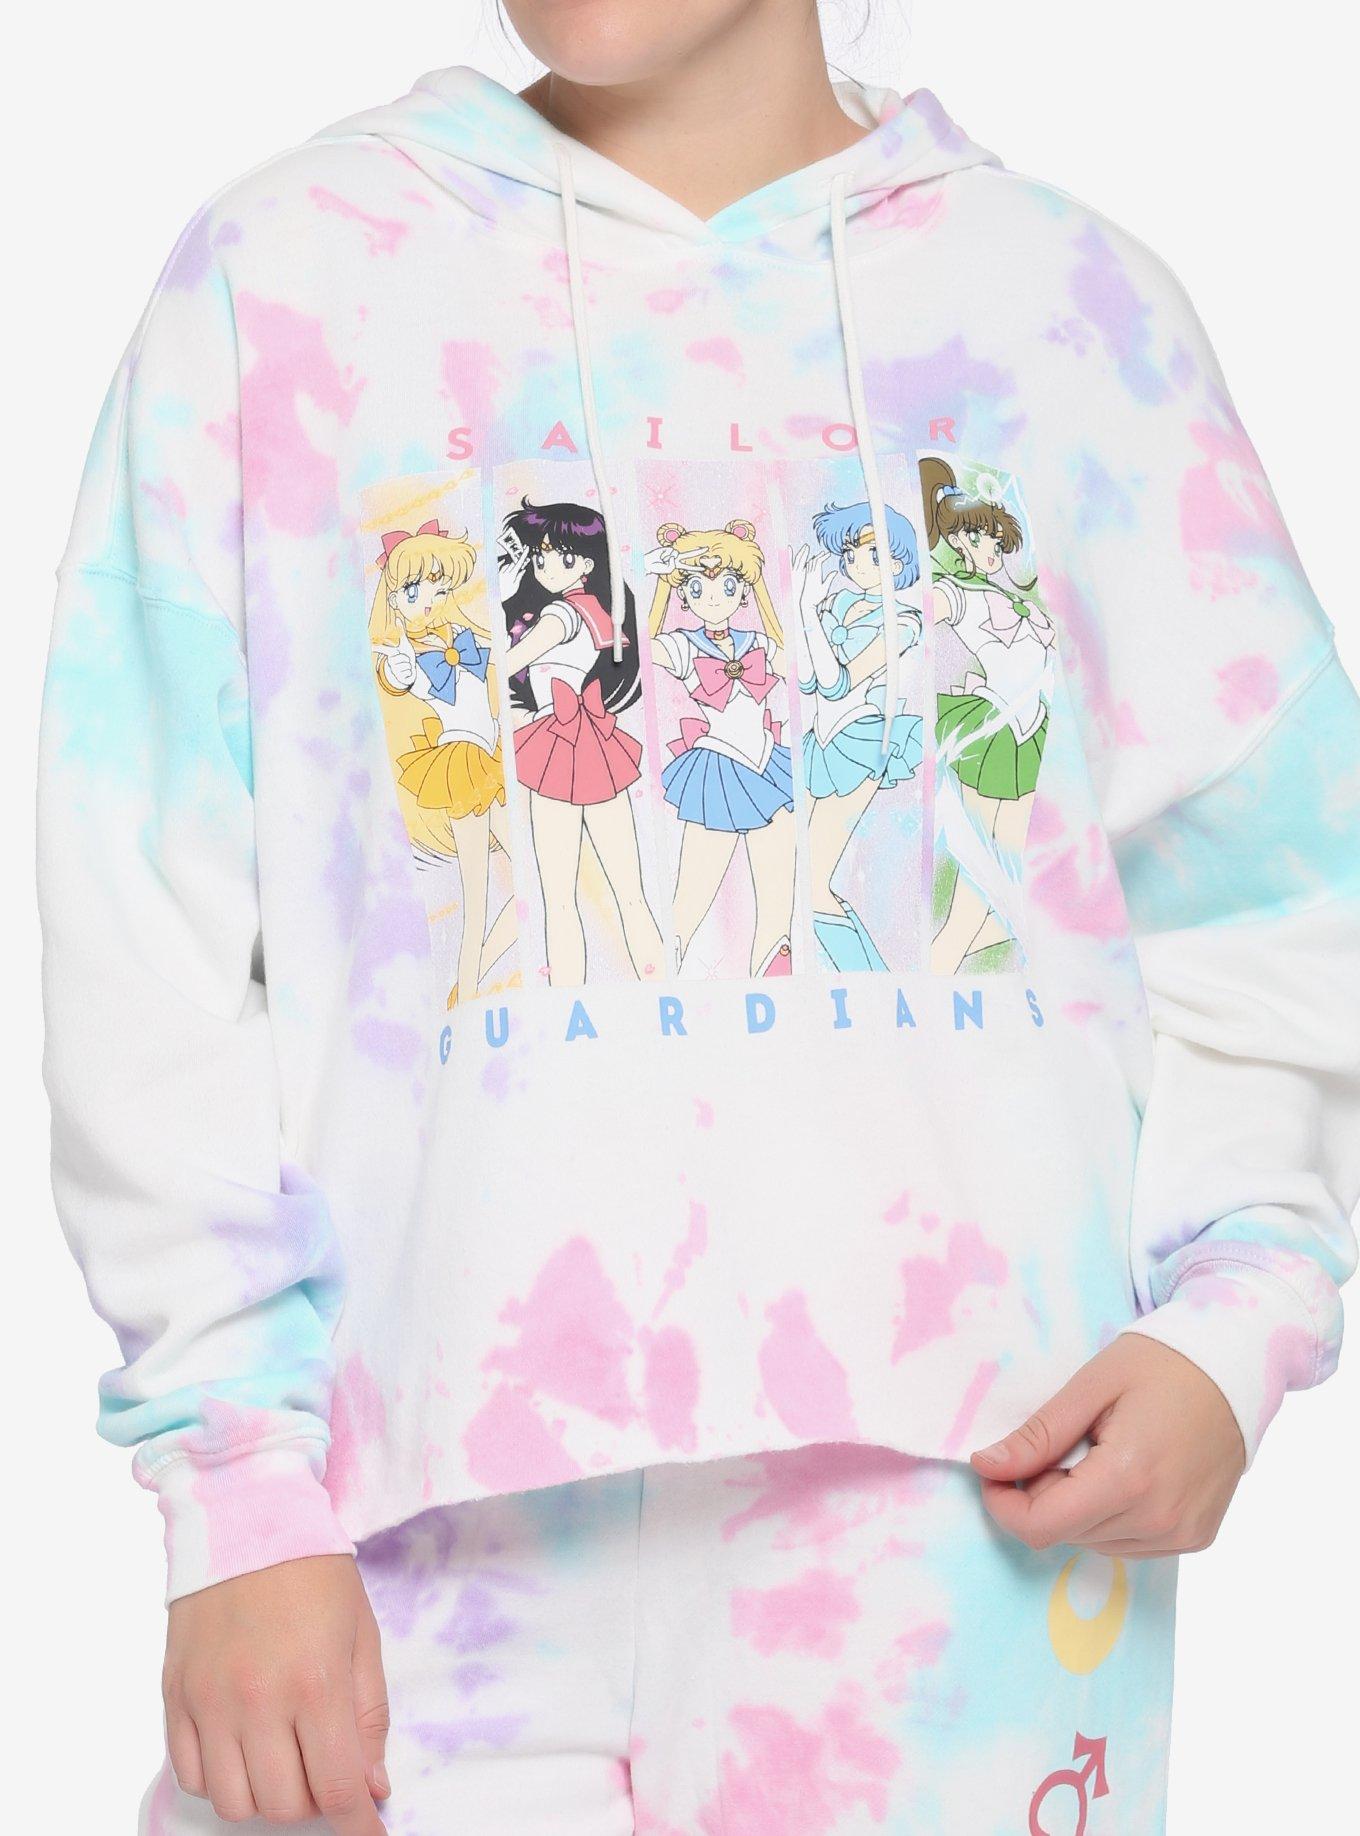 Sailor Moon Group Grid Pastel Wash Girls Crop Sweatshirt Plus Size, MULTI, hi-res